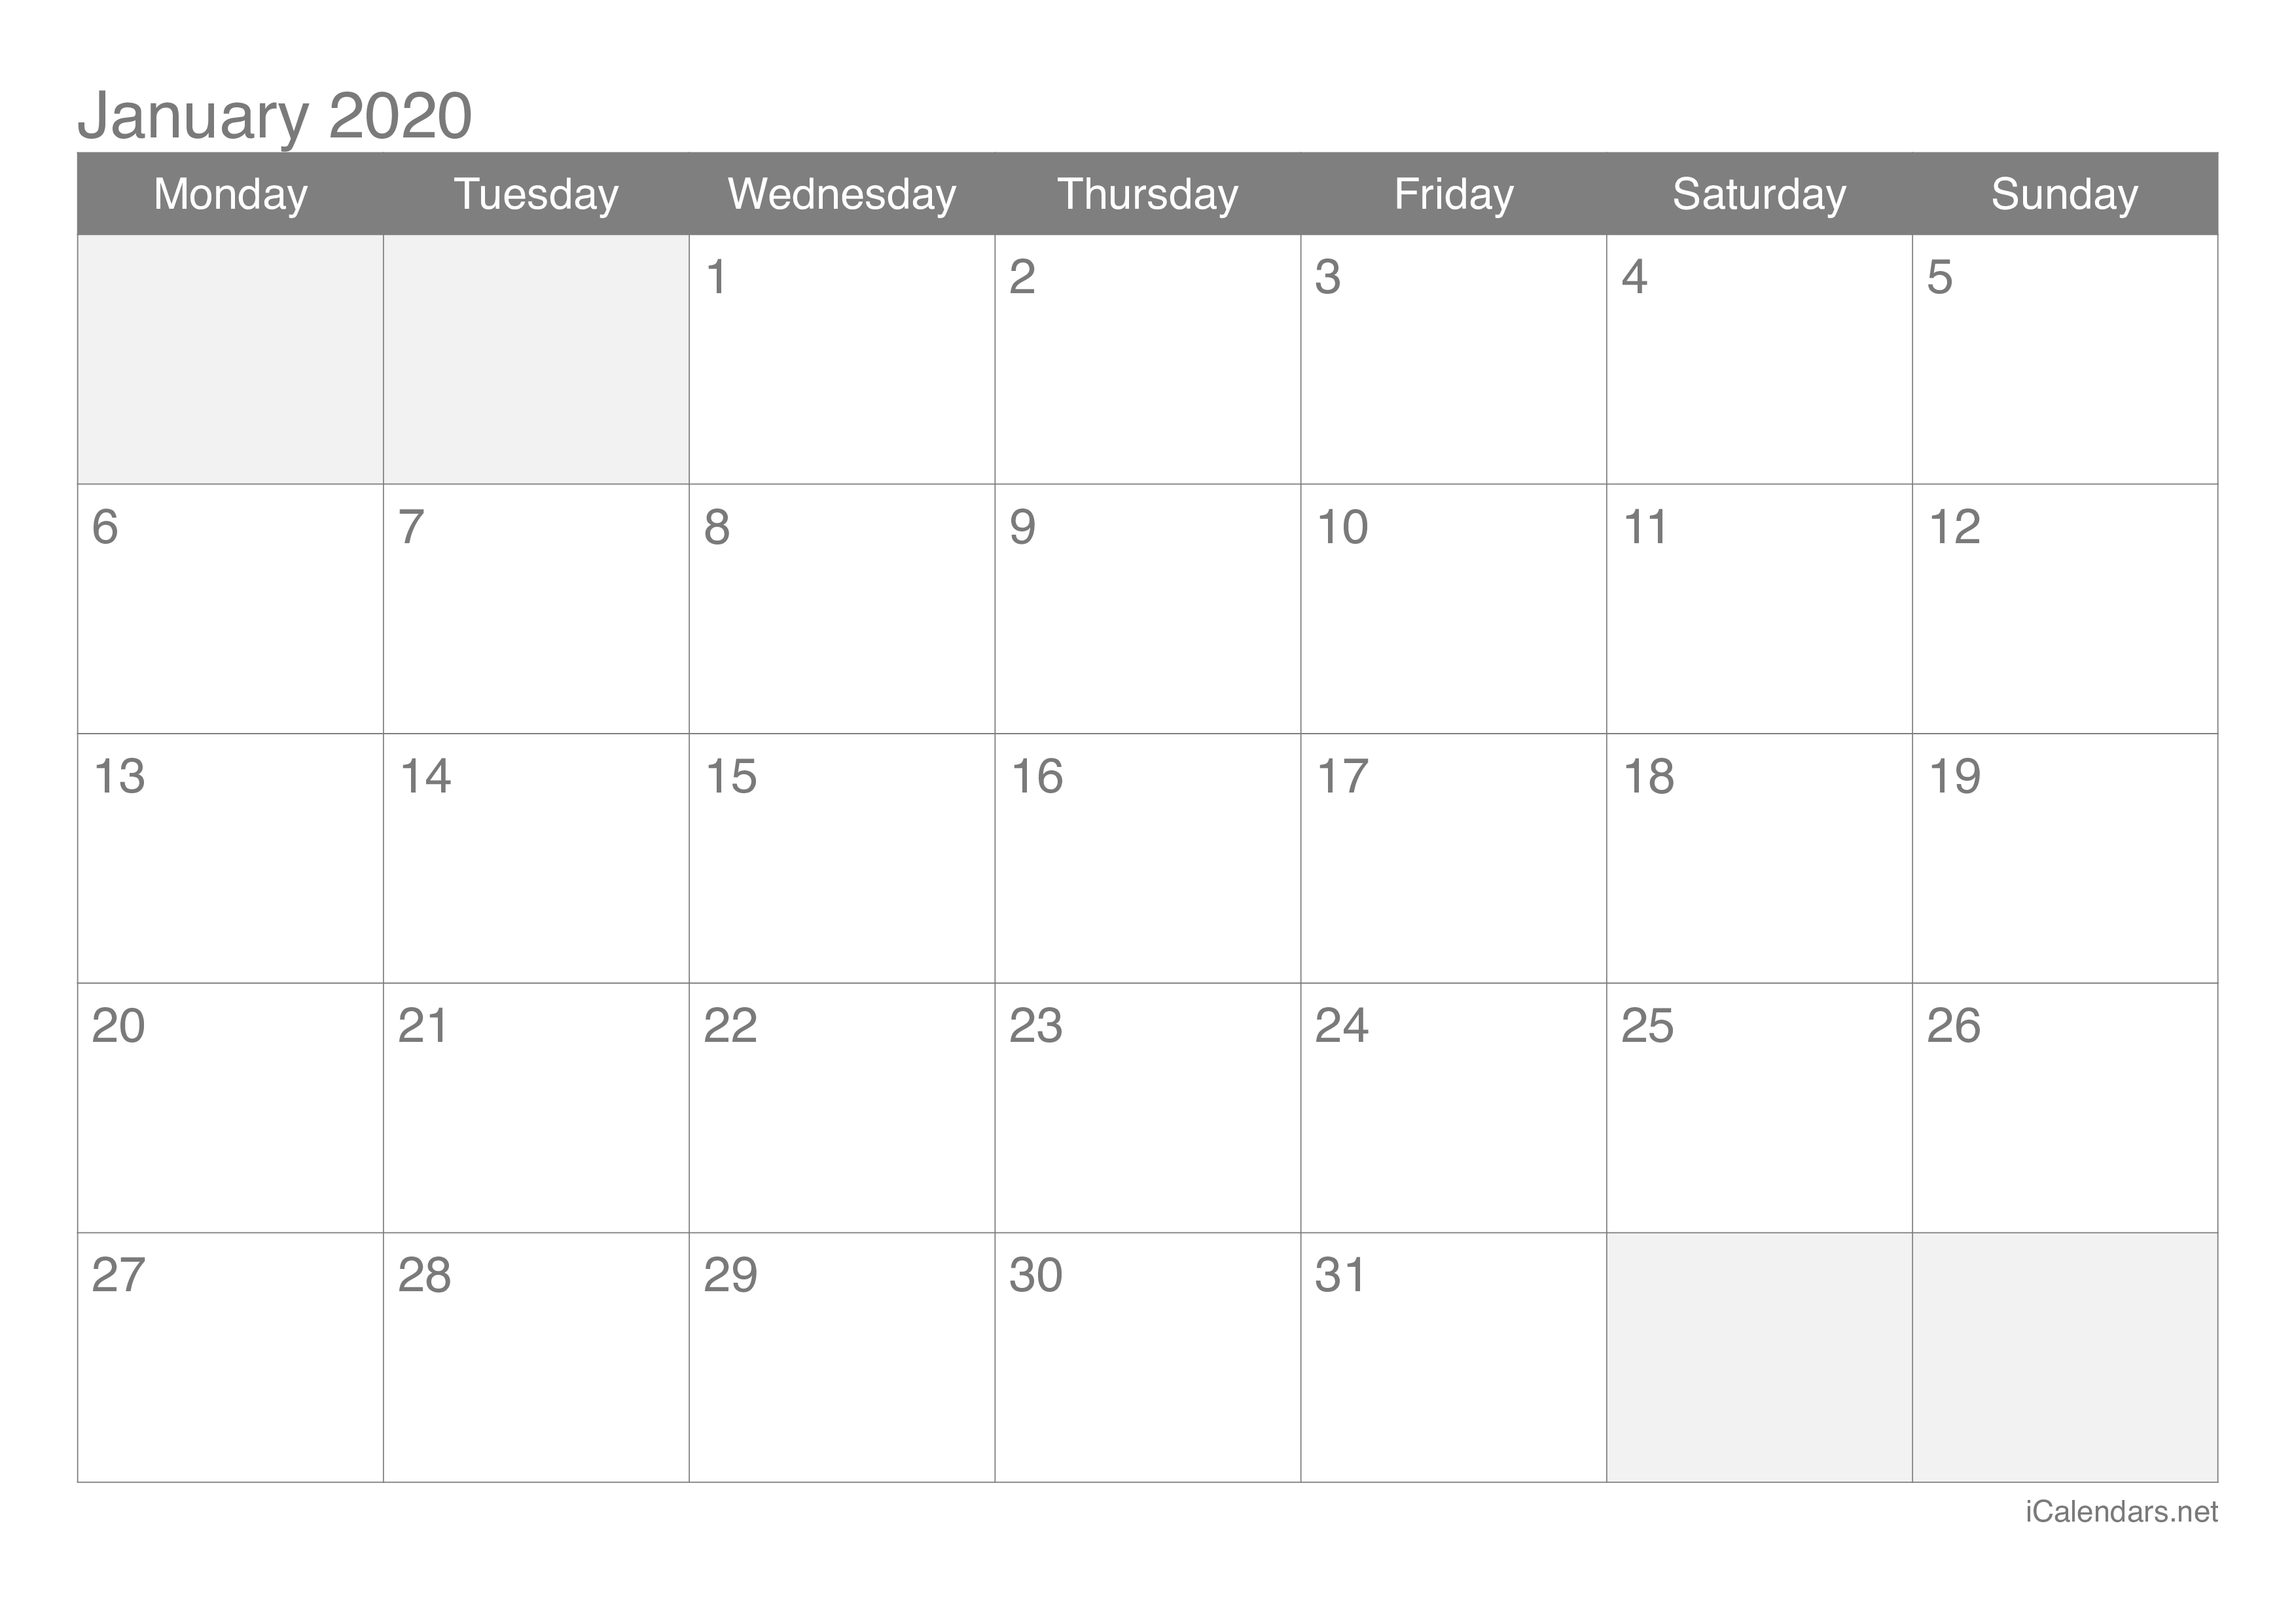 January 2020 Printable Calendar  Icalendars in January 2020 Calendar Png